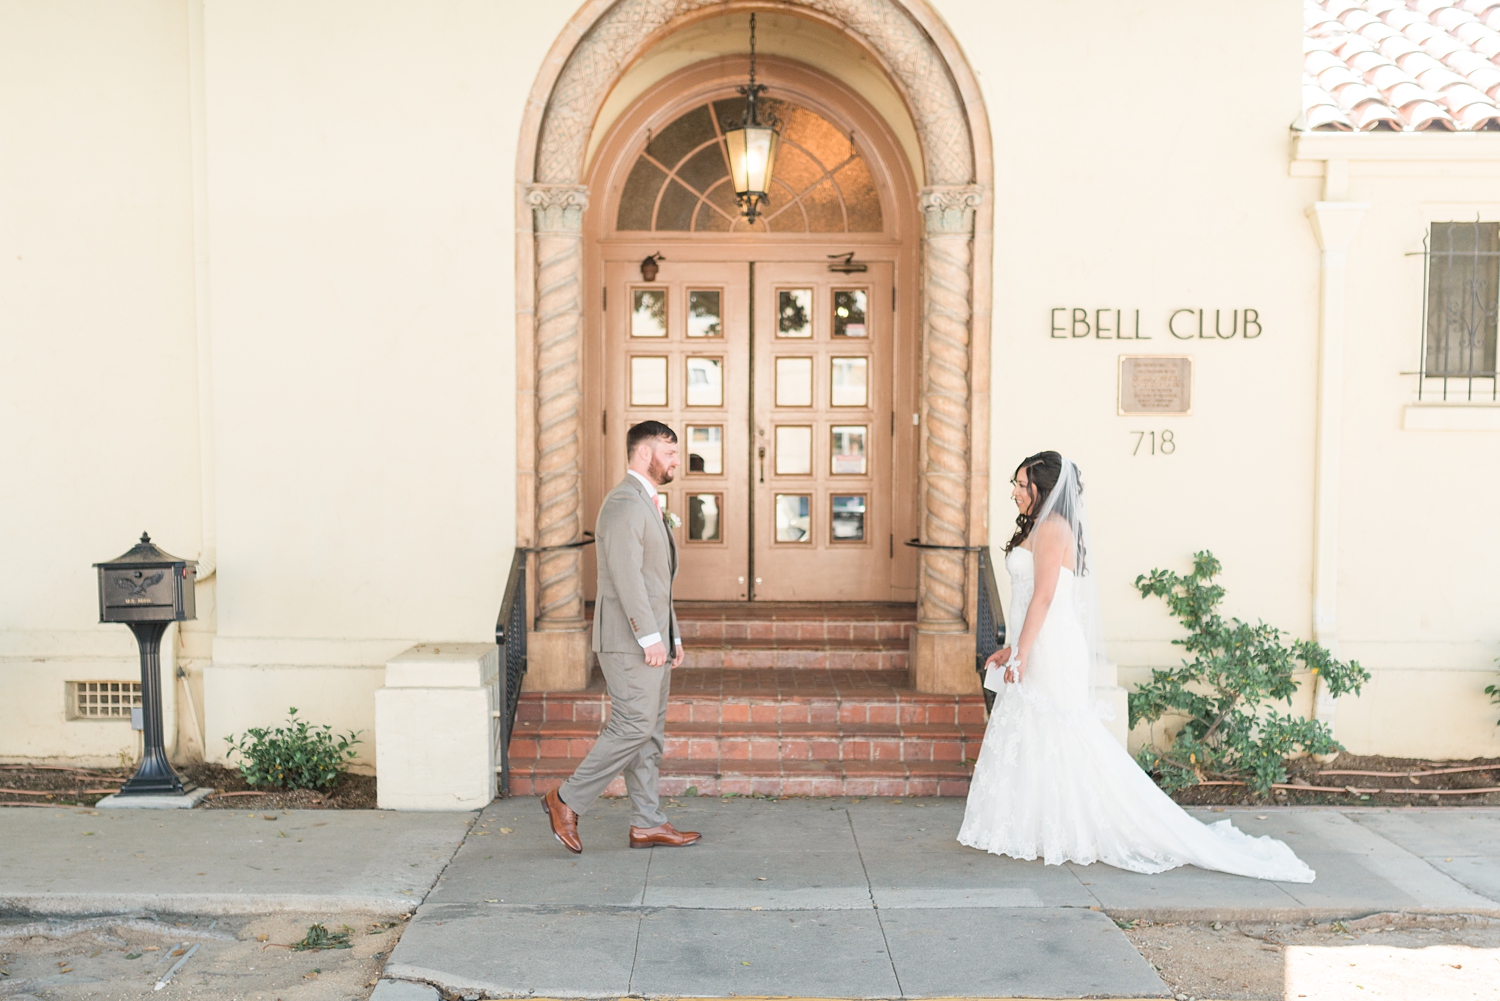 Ebell Club of Santa Ana OC Wedding Photographer_0047.jpg